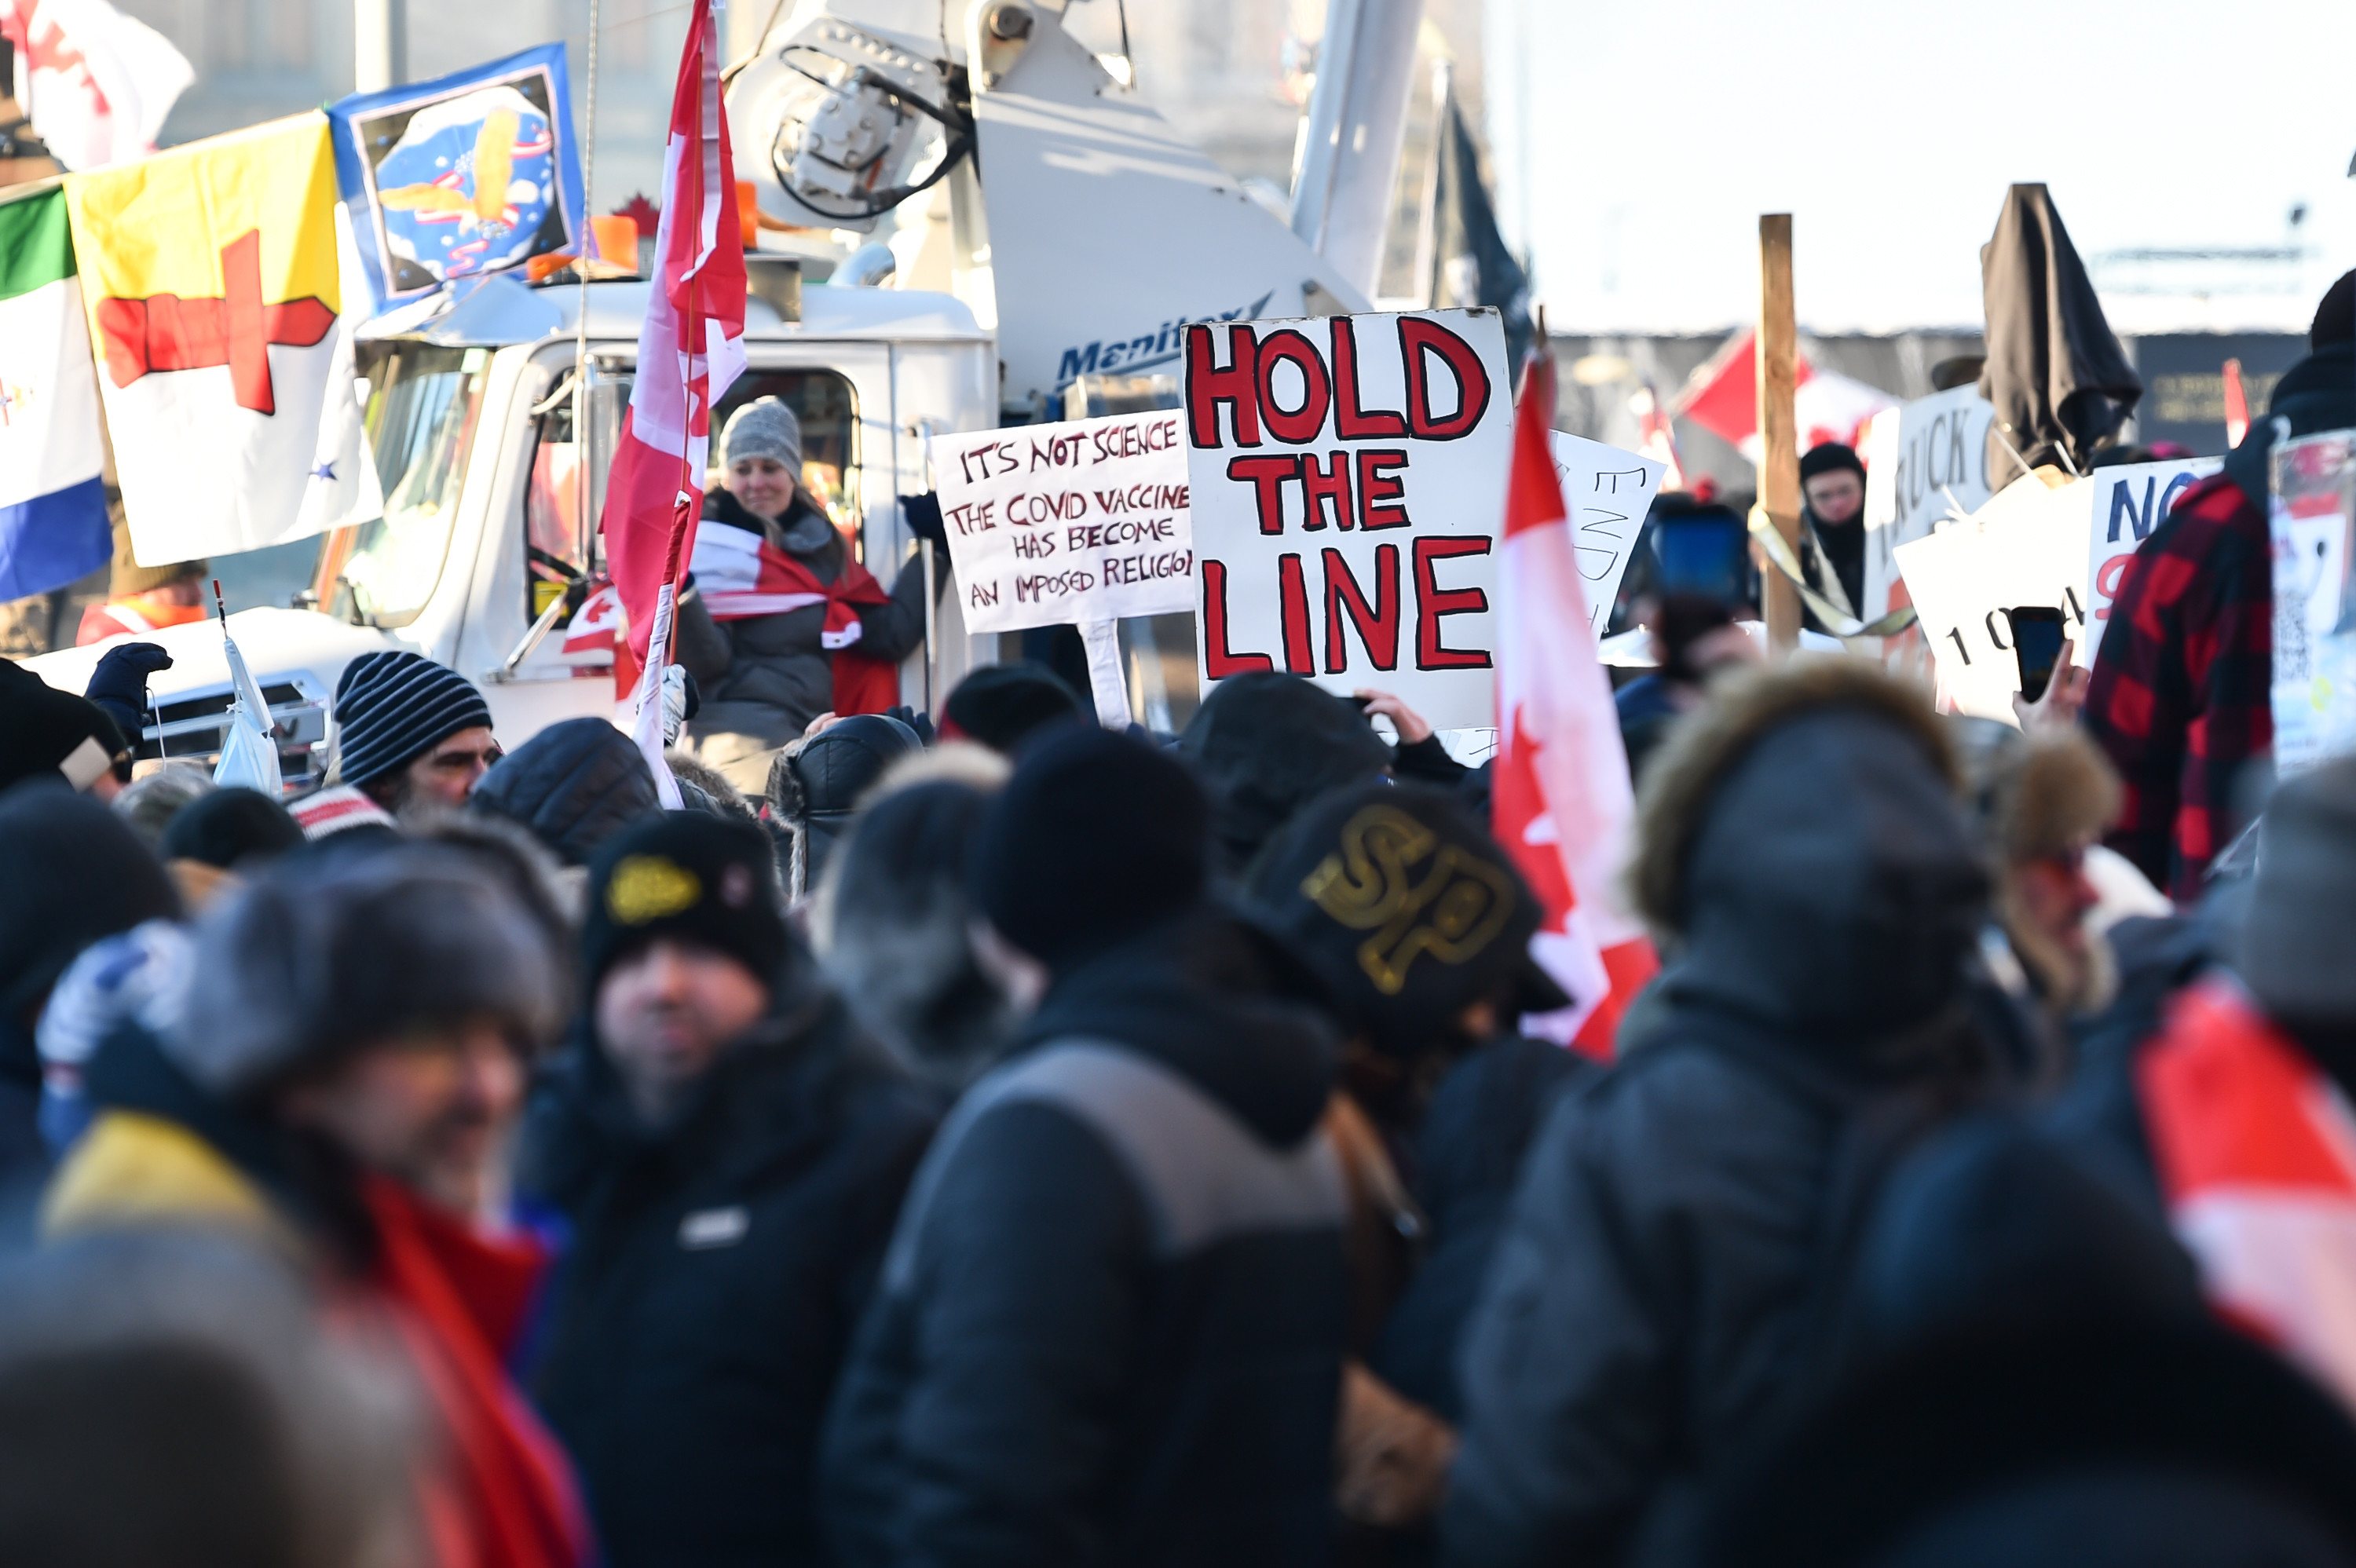 Truckers Protest Vaccine Mandates In Cities Across Canada